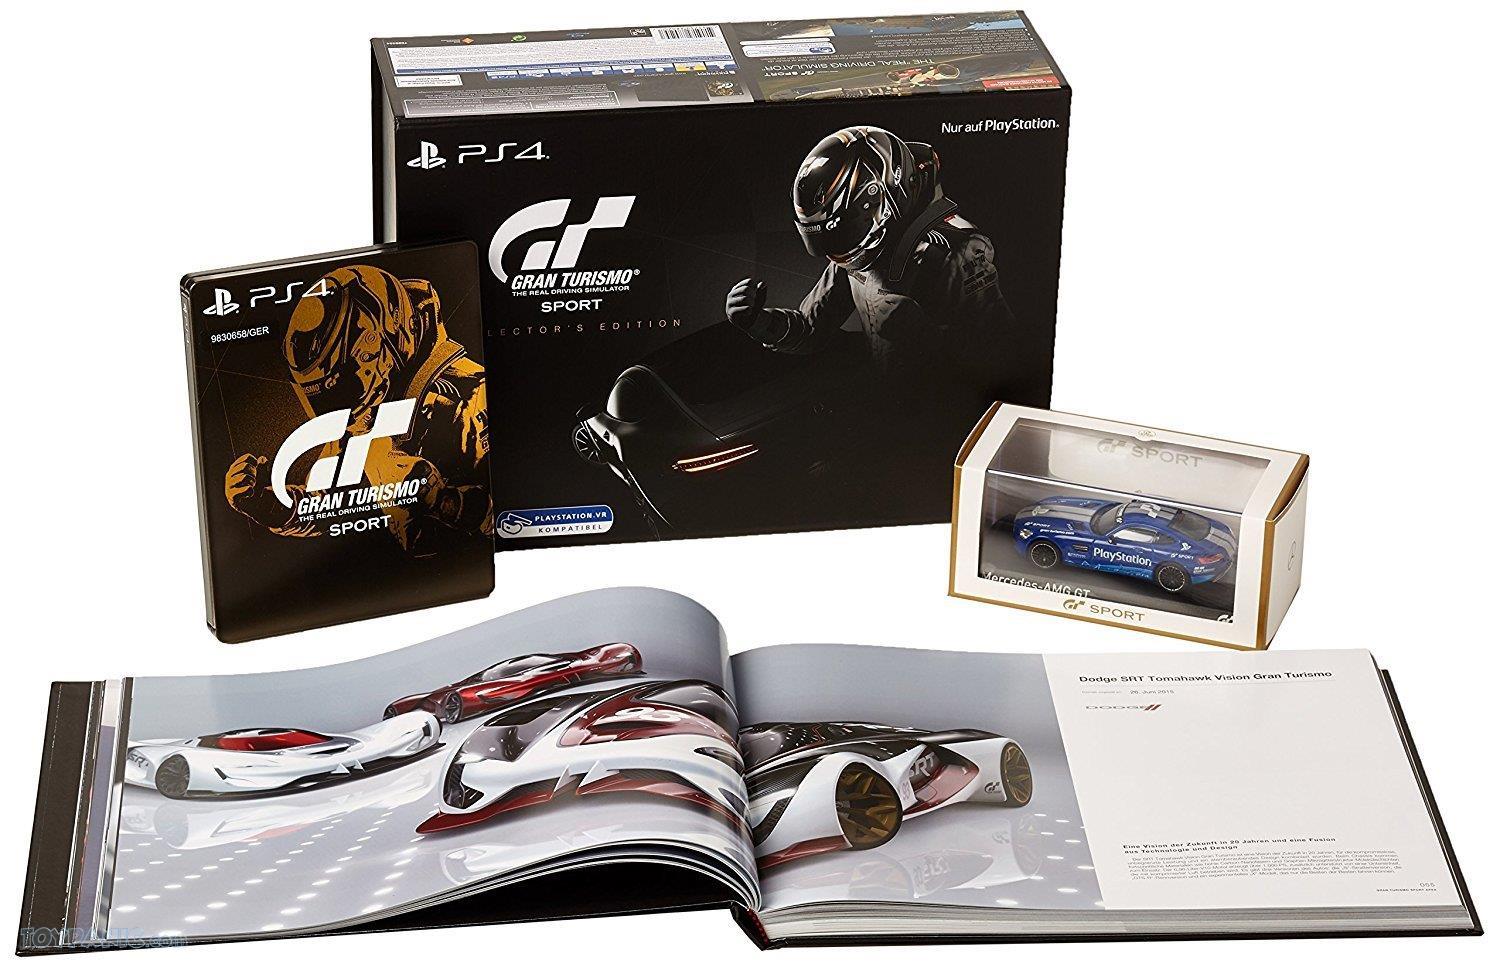 Grant Turismo Spor колекционное изданием. Gran Turismo Sport коллекционное издание. Gran Turismo 7 коллекционное издание. Gran Turismo 6 Collector's Edition.